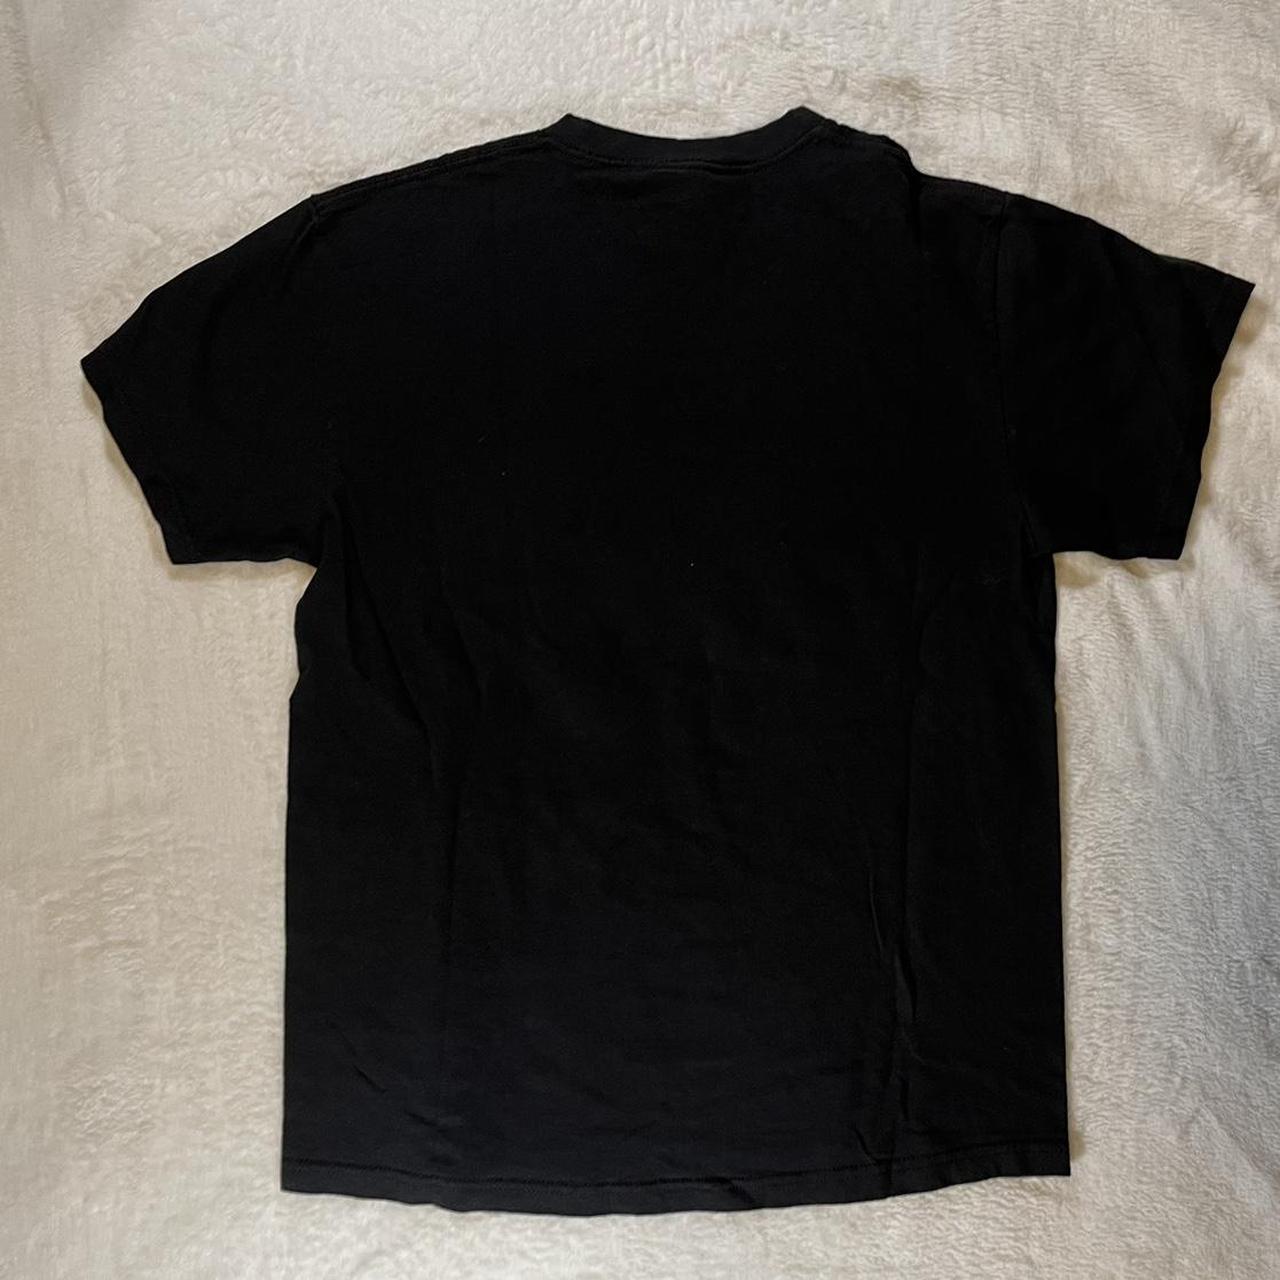 iconic black I heart/love New York T shirt size... - Depop